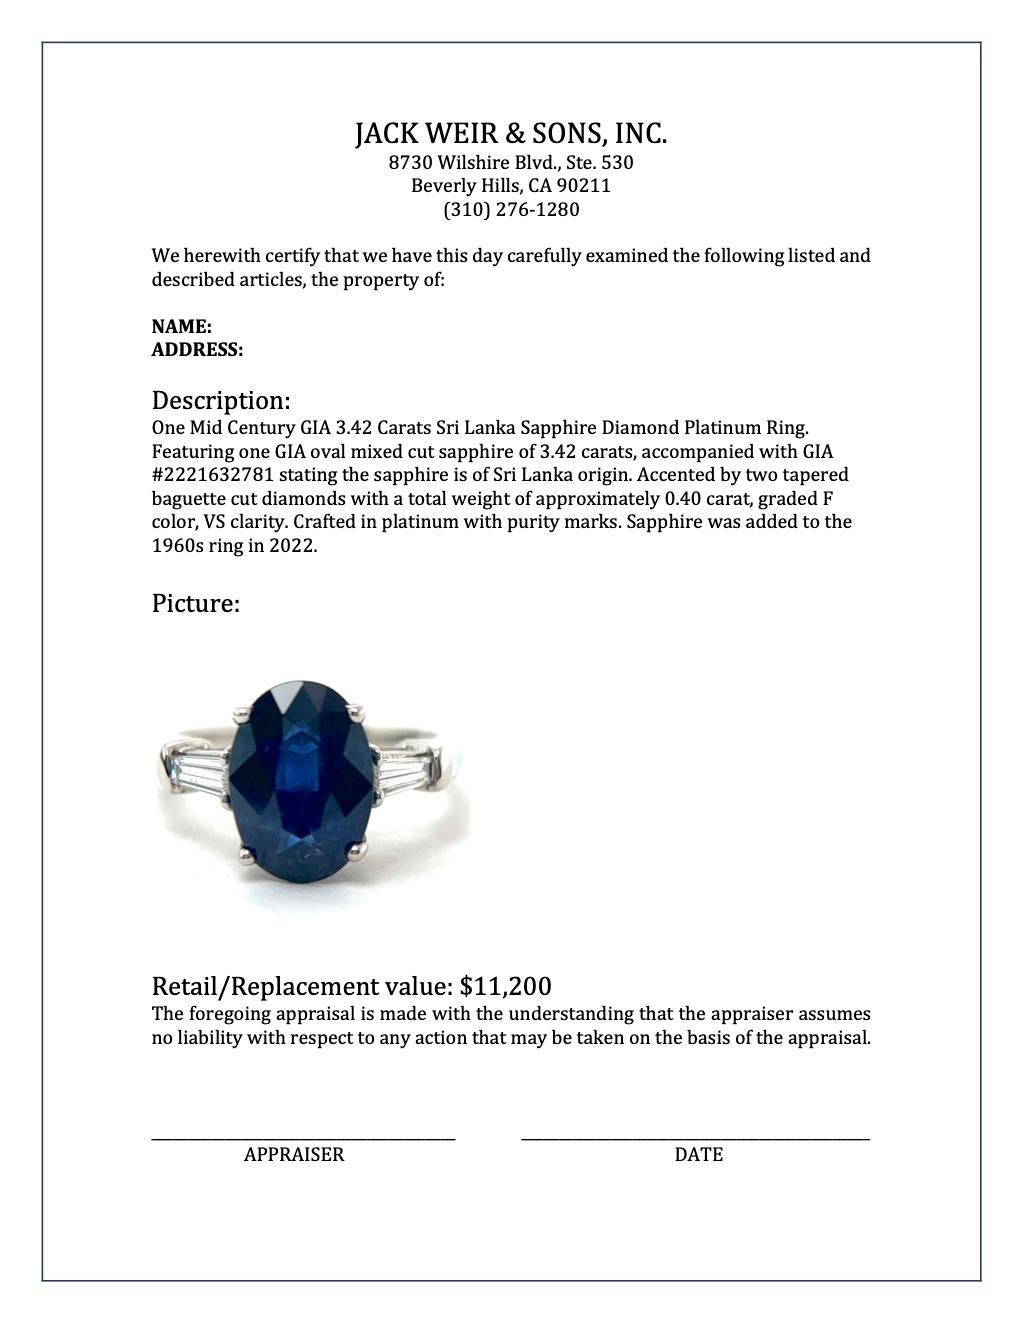 Mid-Century GIA 3.42 Carats Sri Lanka Sapphire Diamond Platinum Ring 1